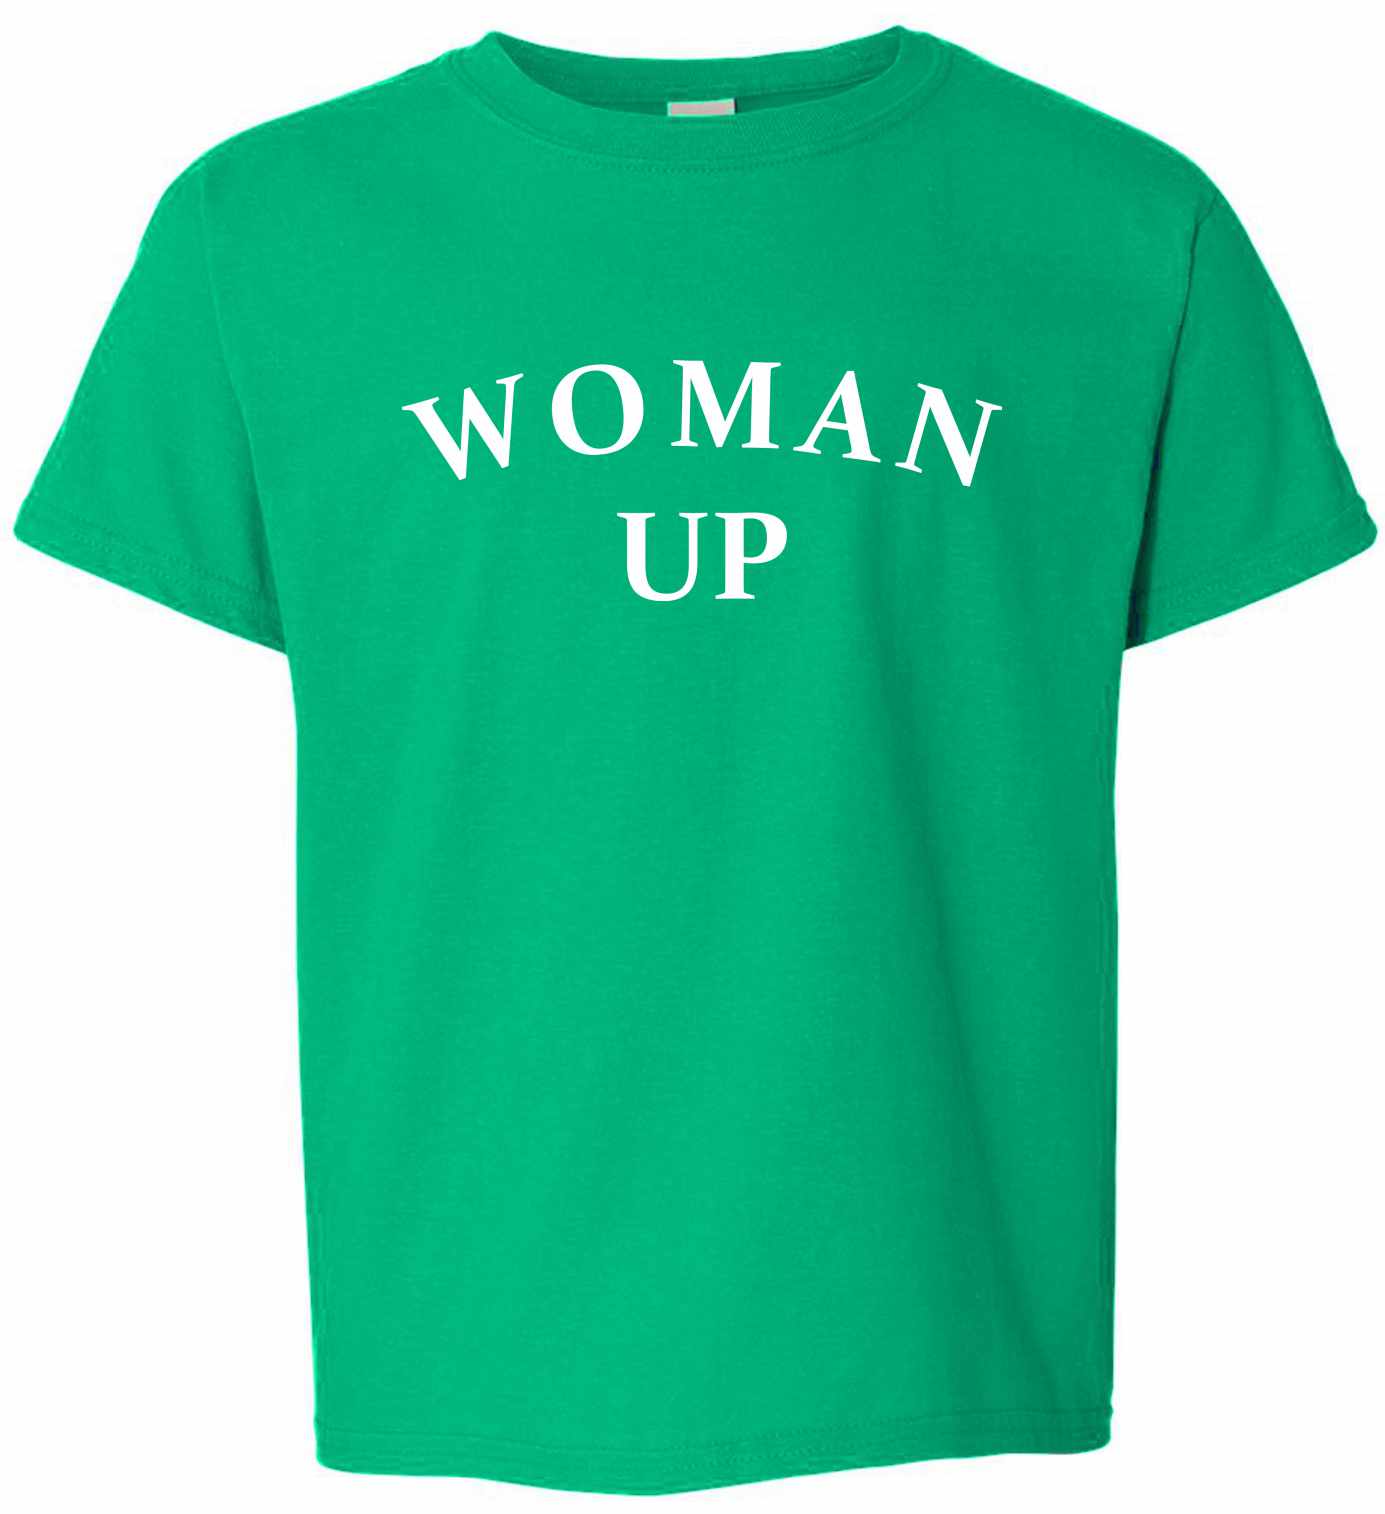 Woman Up on Kids T-Shirt (#1010-201)